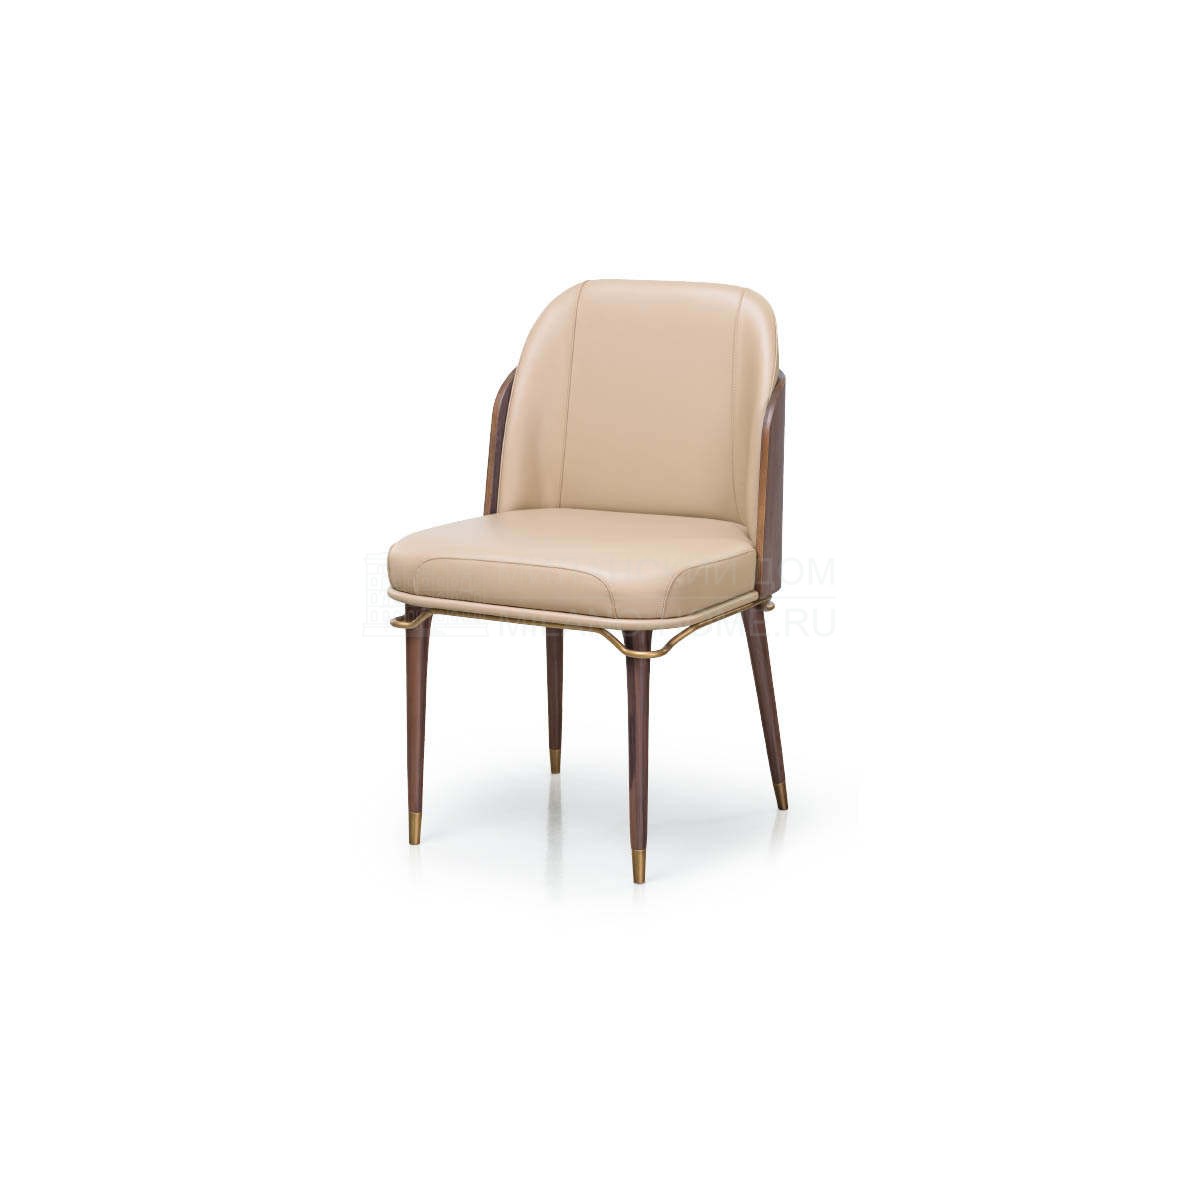 Кожаный стул Melting Light leather chair из Италии фабрики TURRI